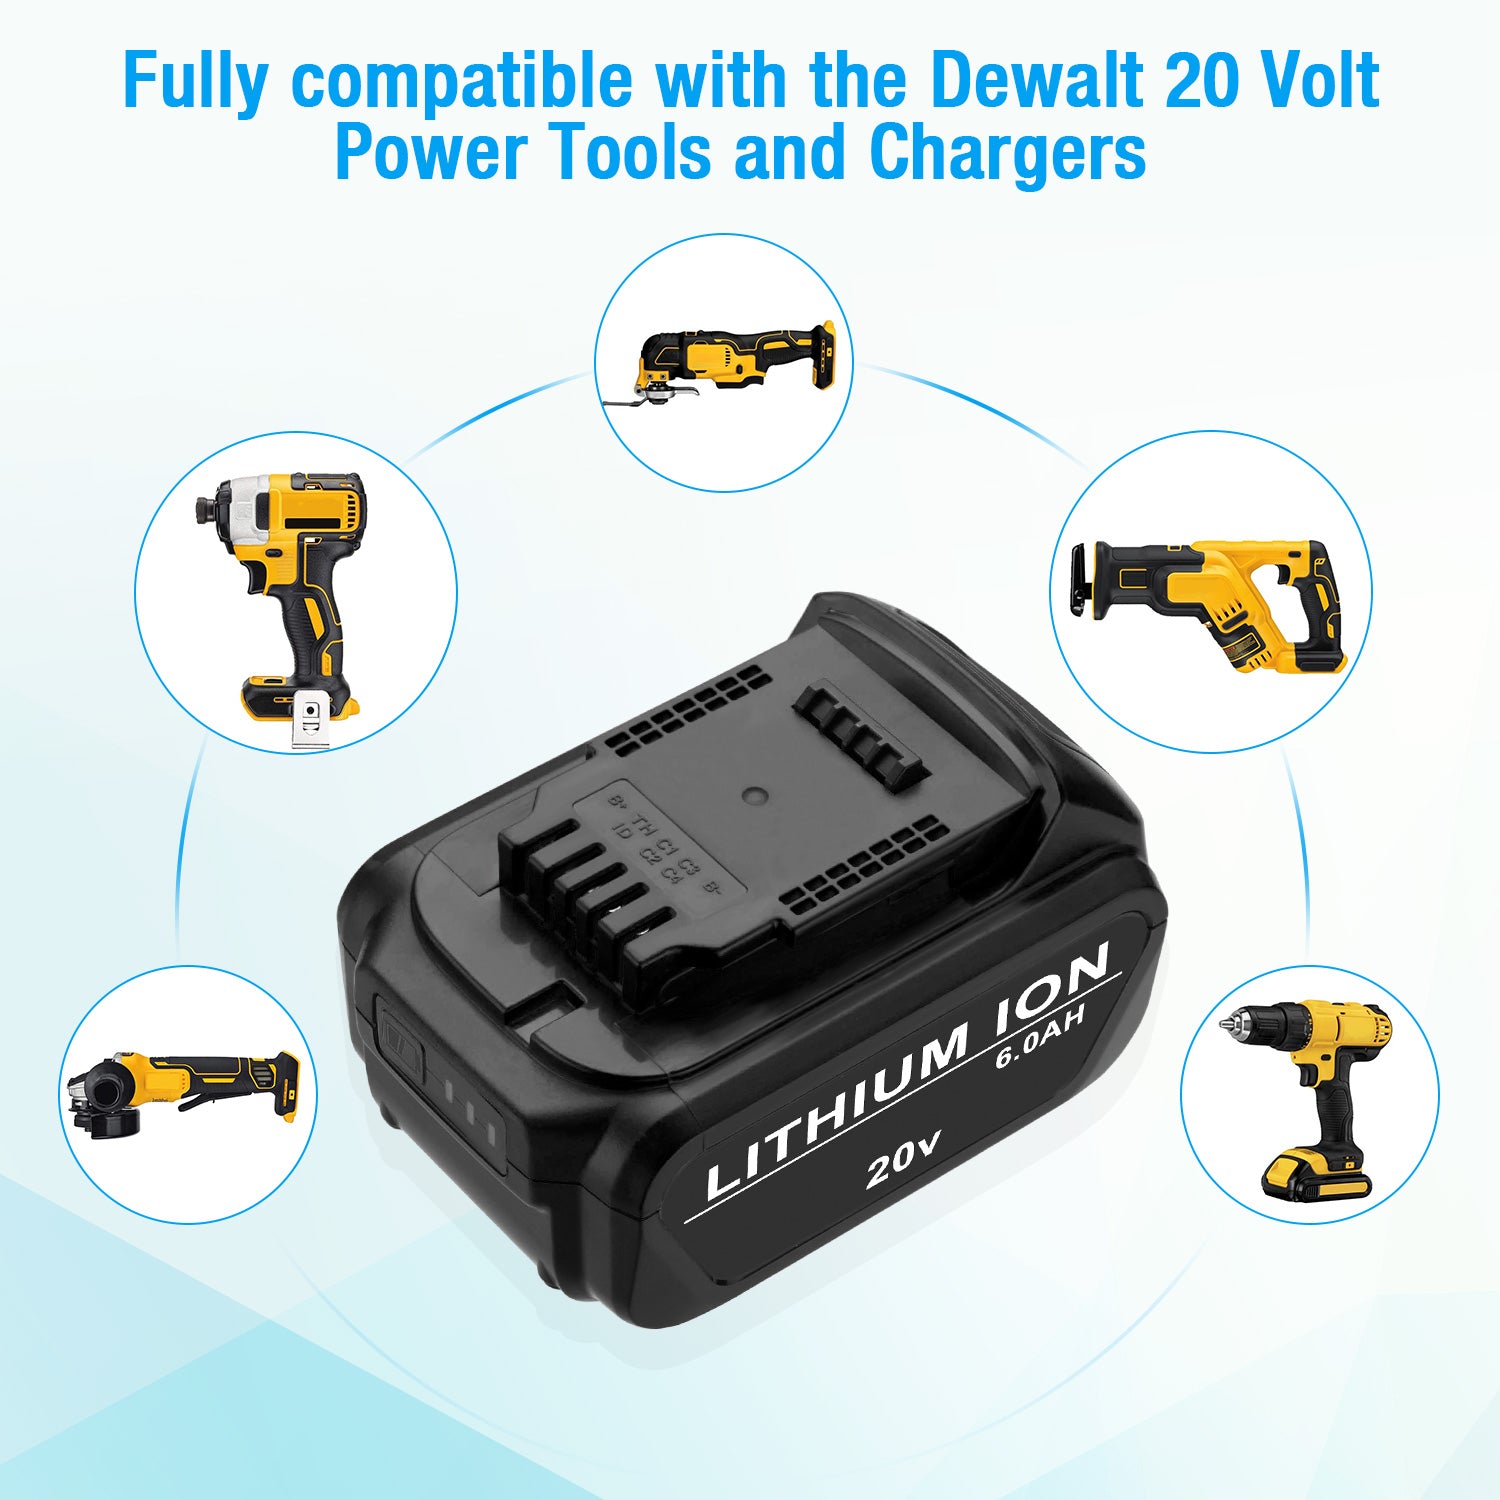 Dewalt 20V Lithium Replacement Battery 6.0Ah